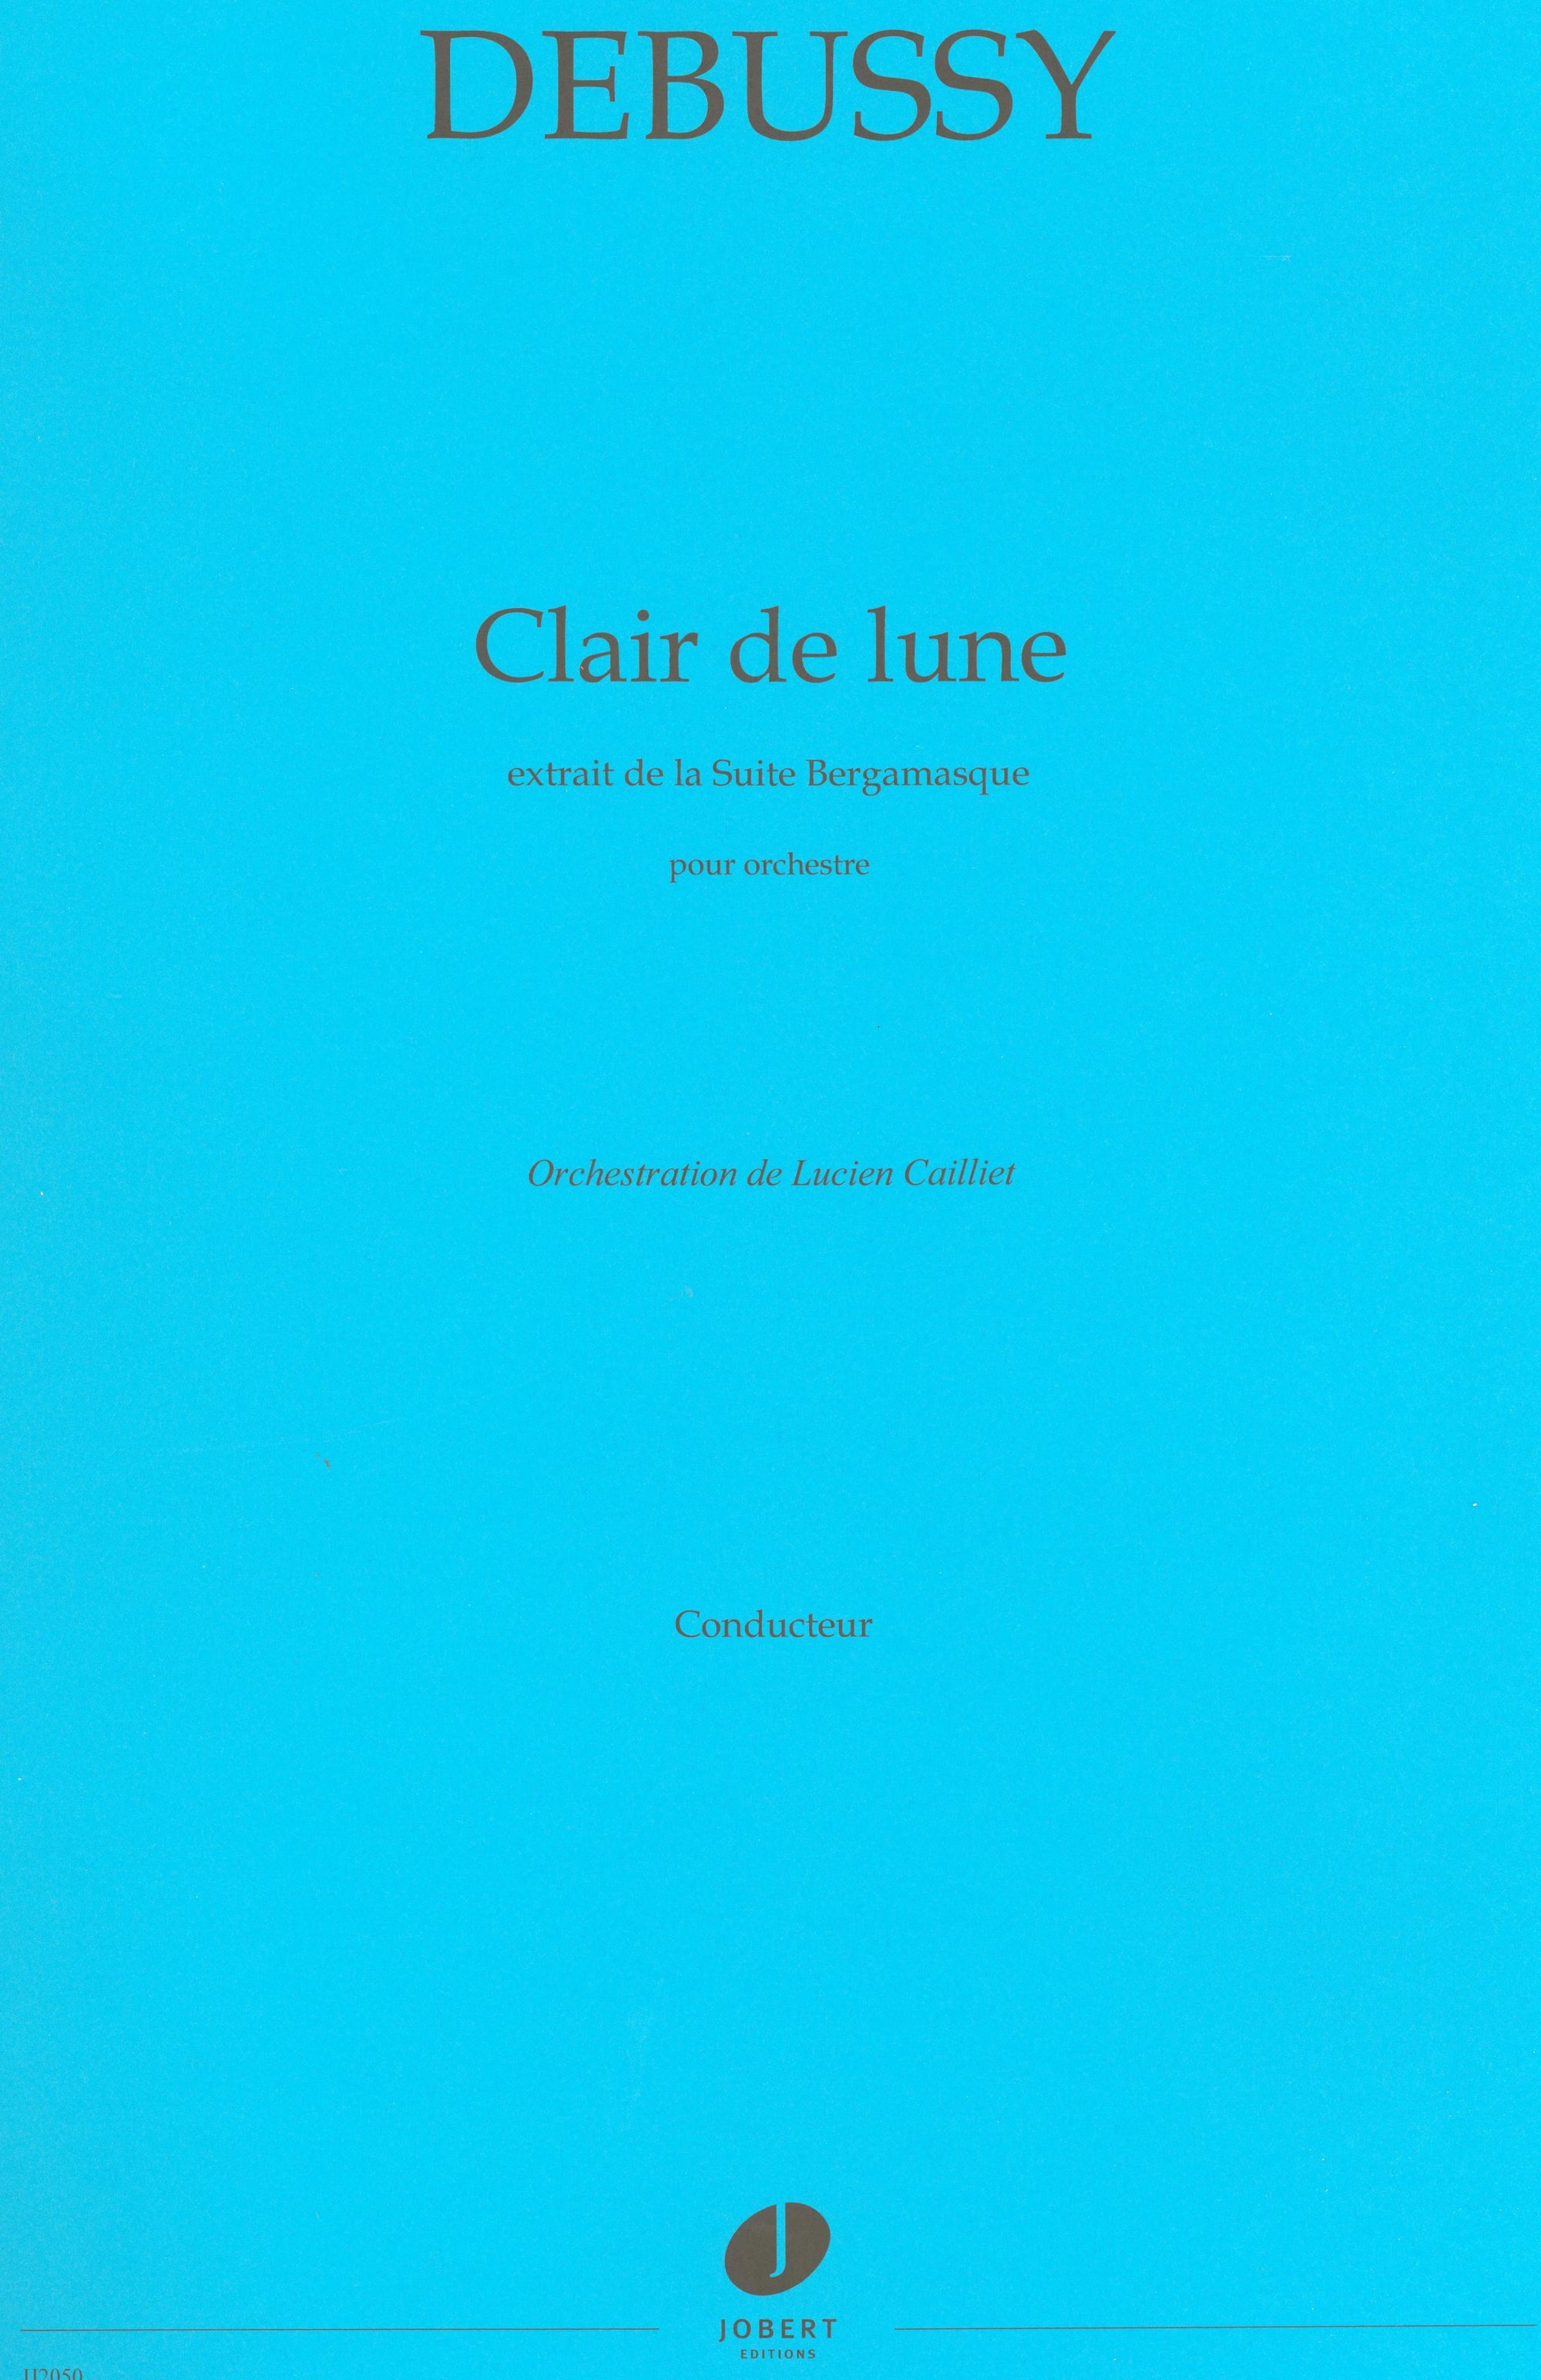 Debussy: Clair de lune (arr. for orchestra)